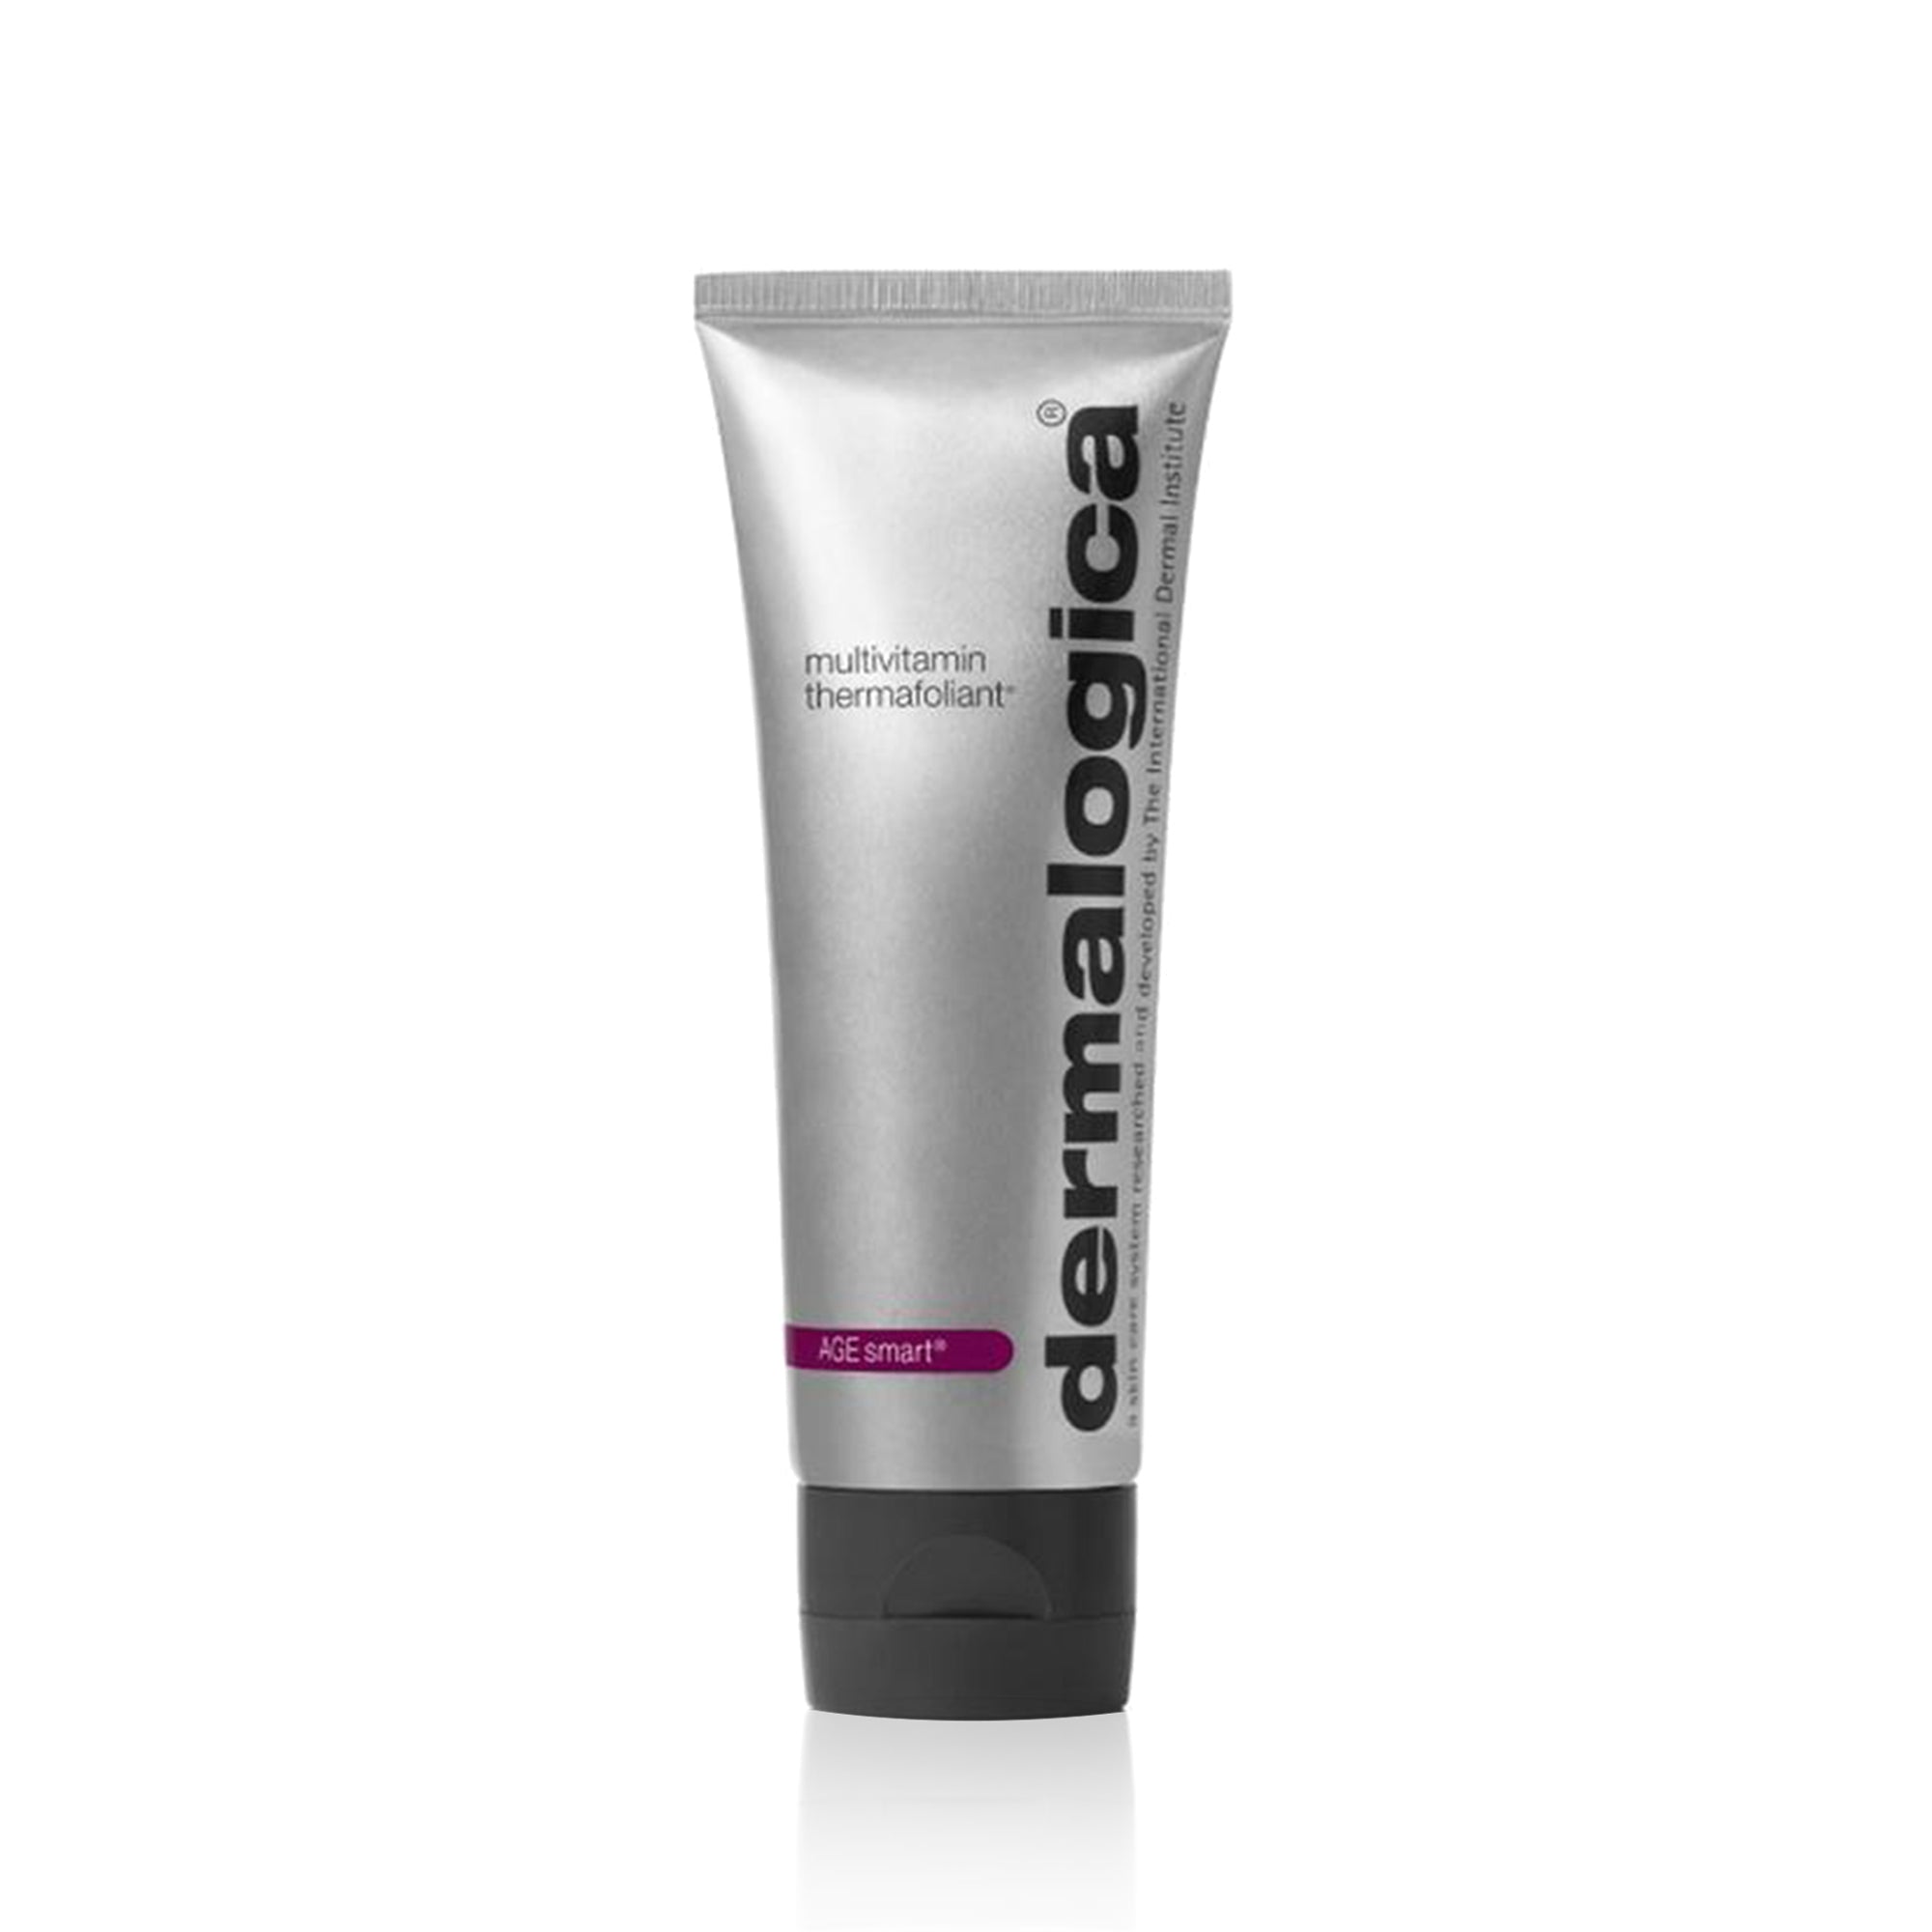 Dermalogica Vitamin Warming Skin Renewal Cream | AGE smart multivitamin thermafoliant 75ml